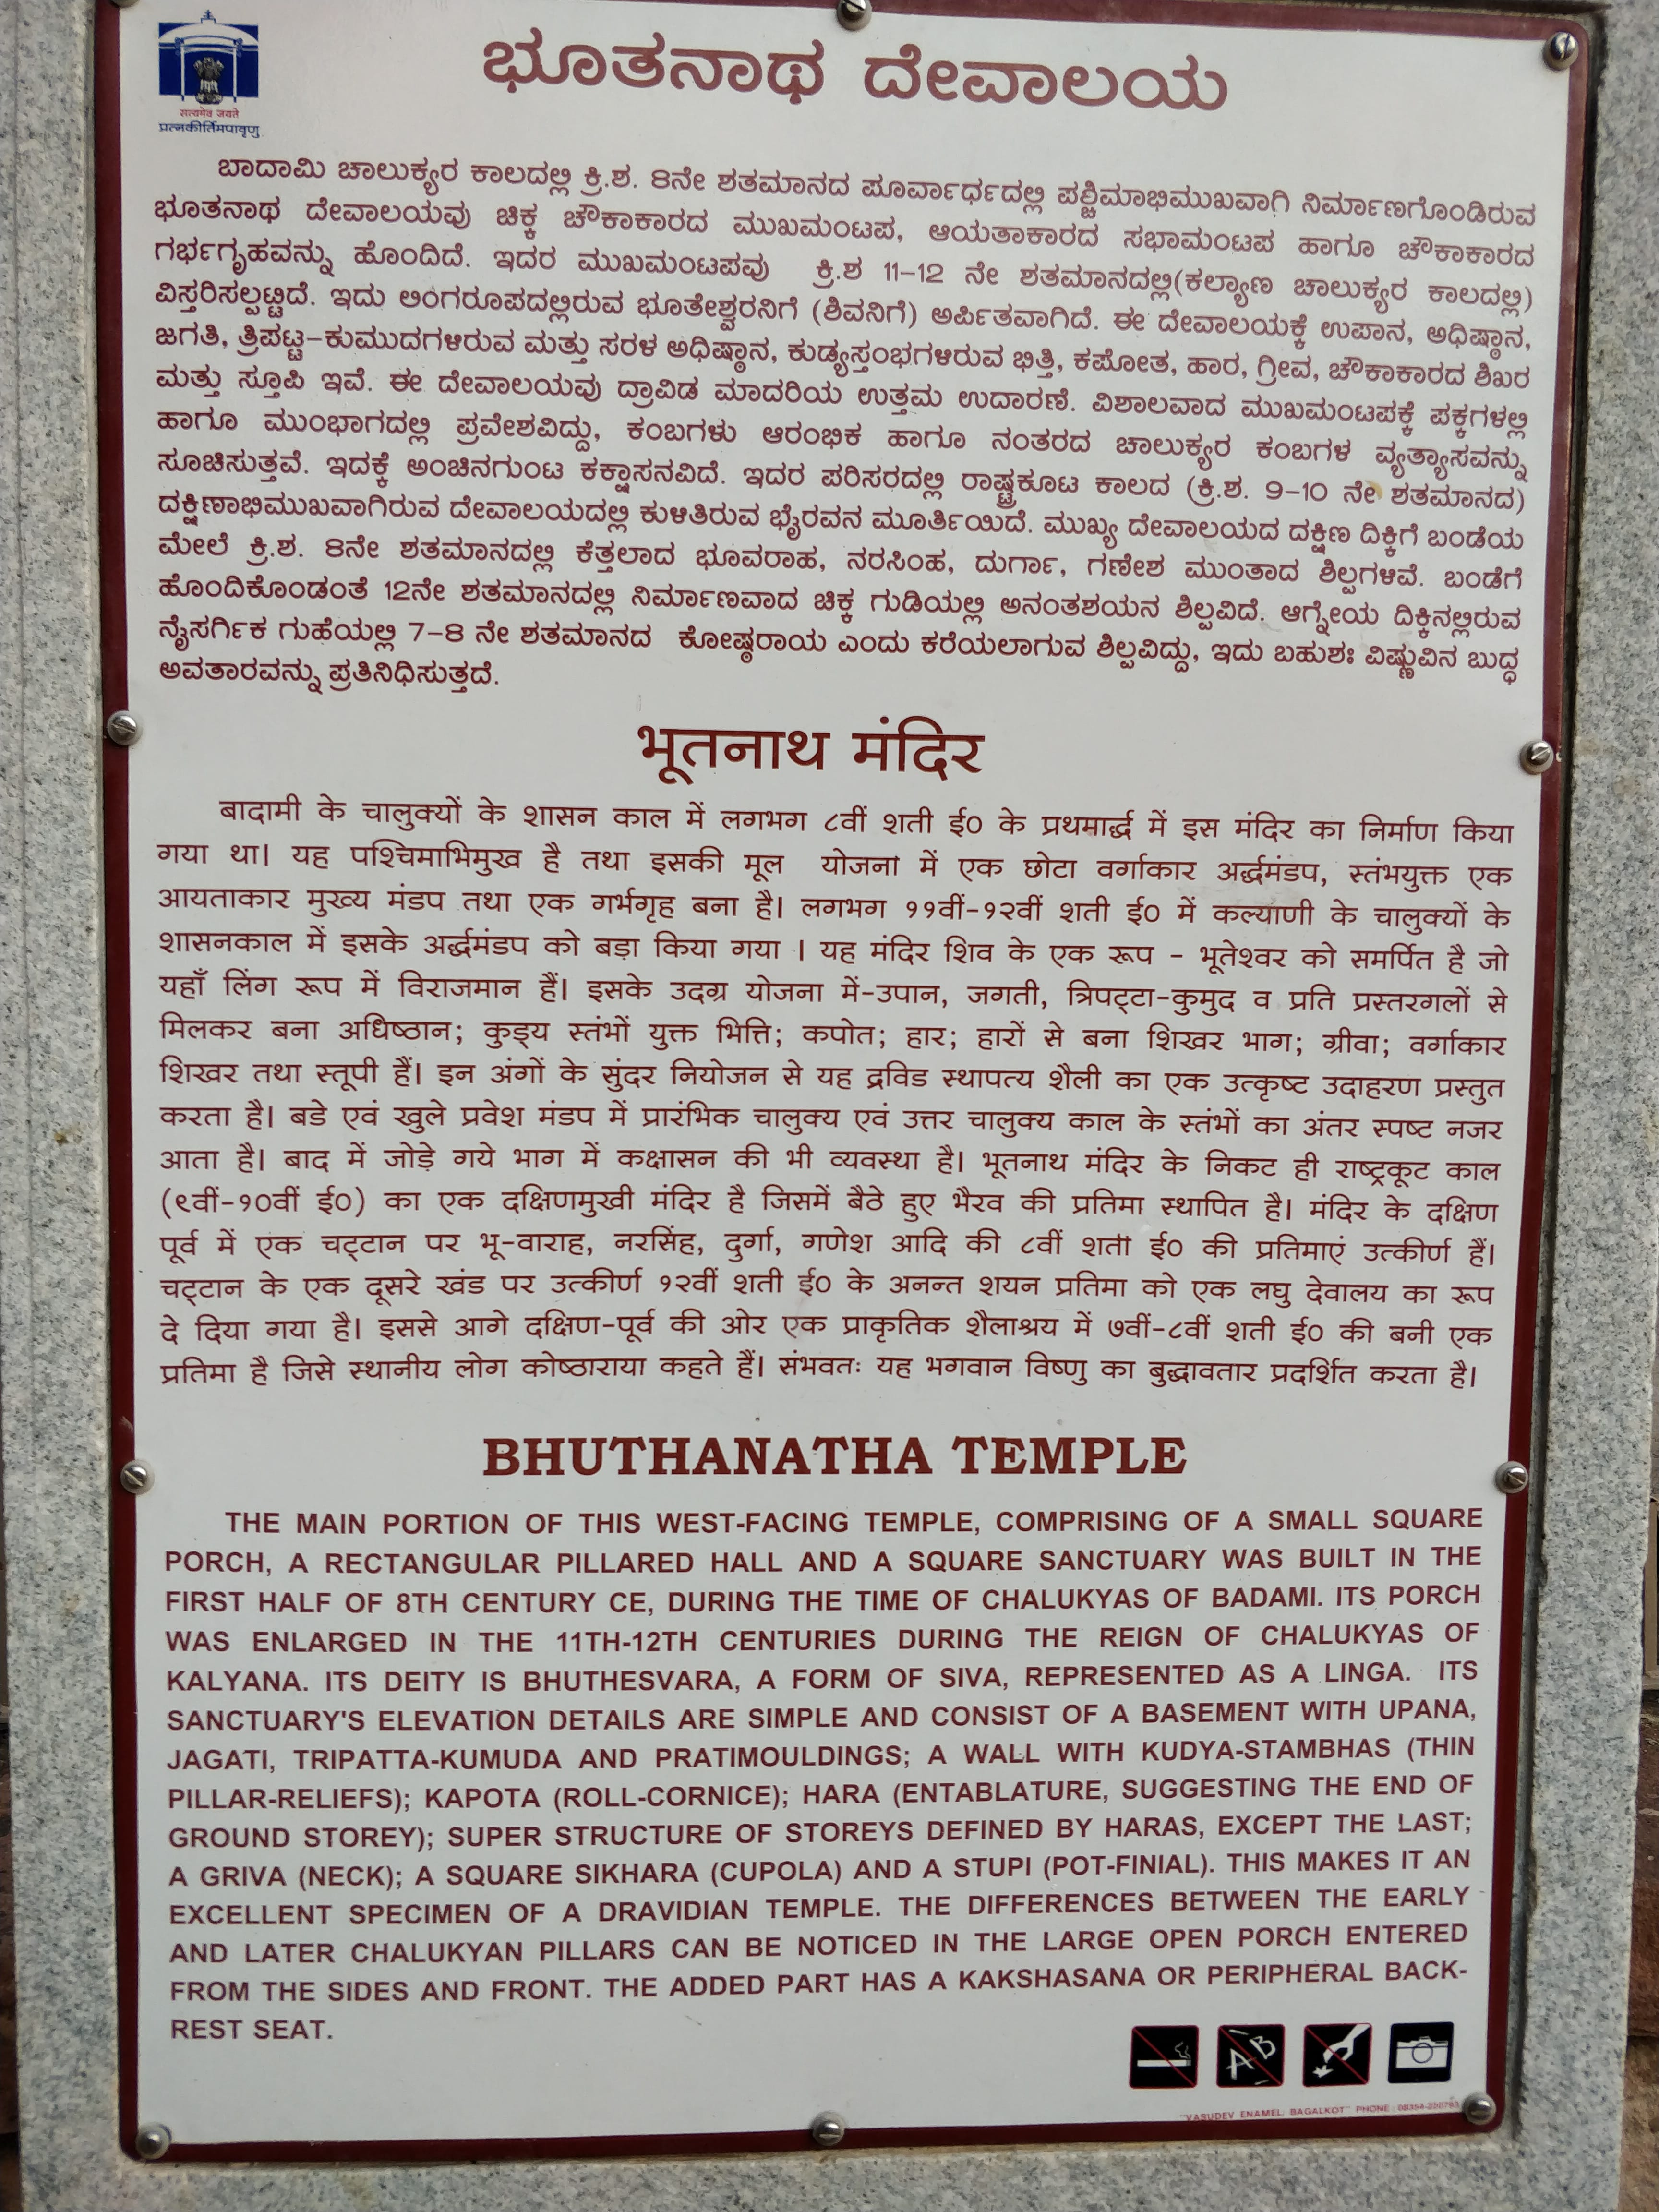 info board - Bhuthanatha temple